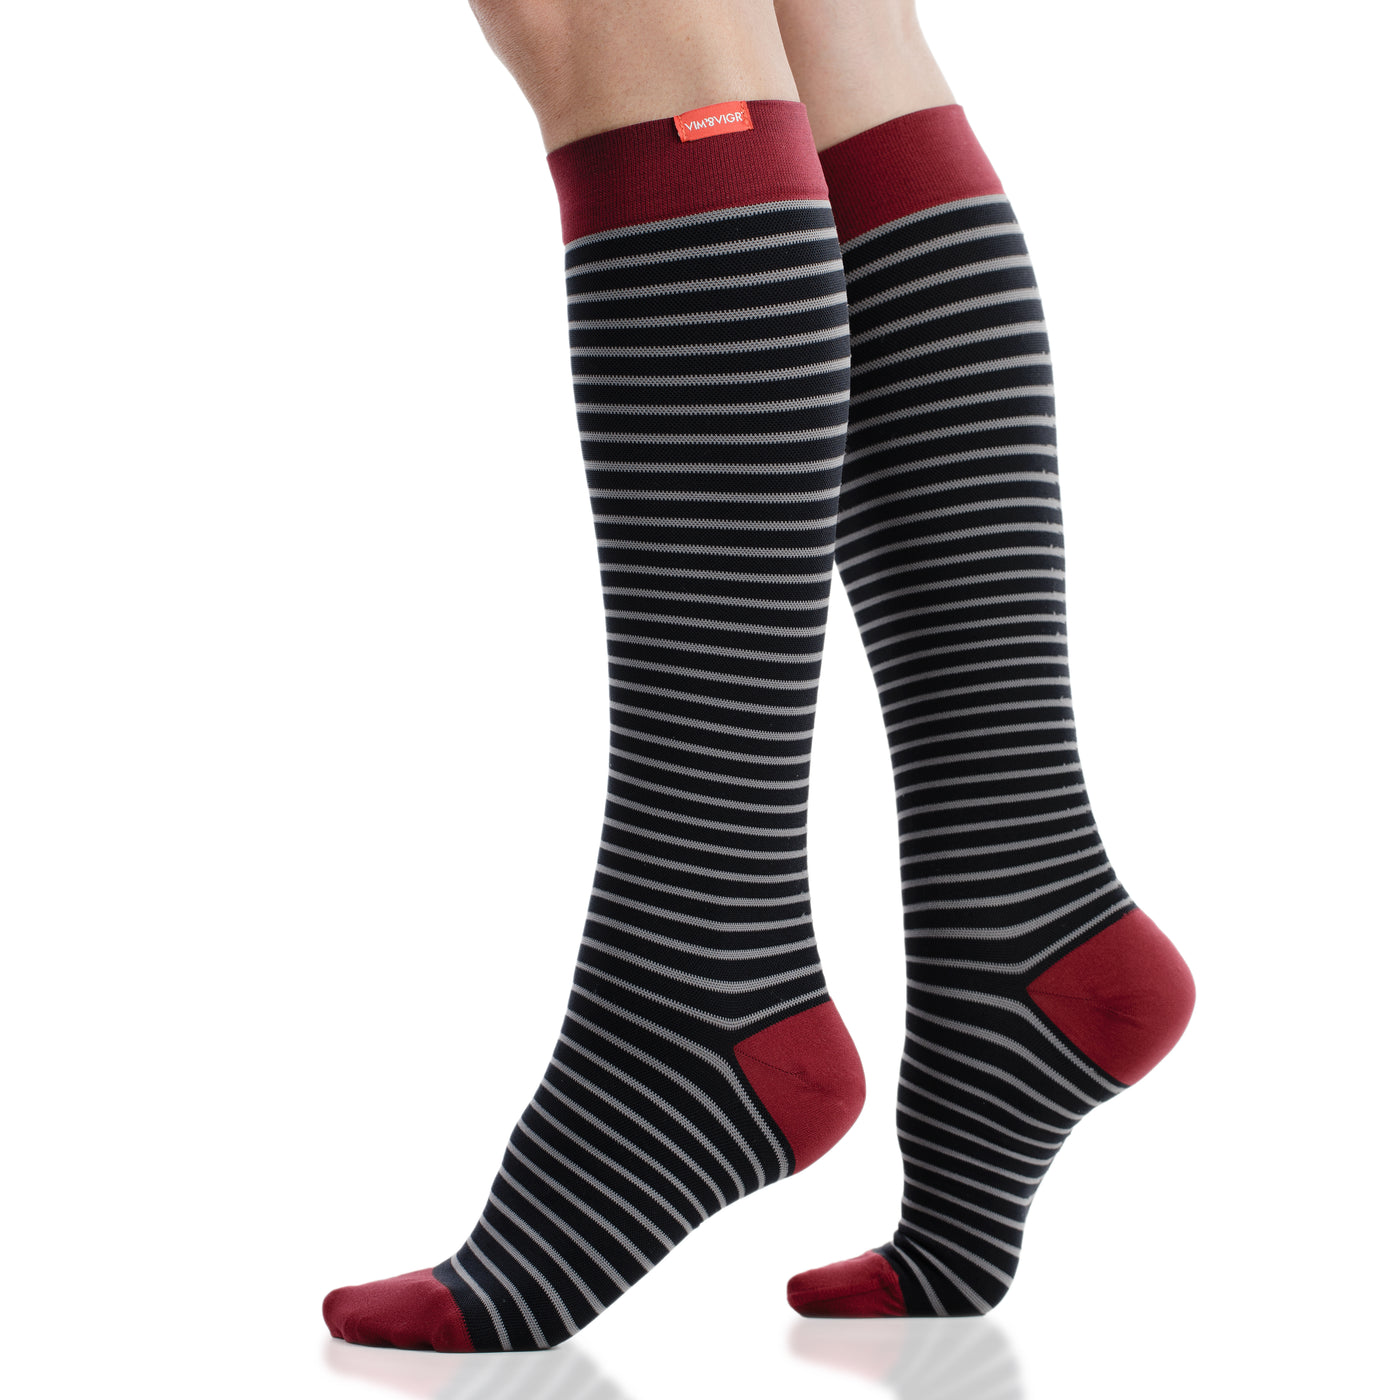 30-40 mmHg: Little Stripe Athena (Nylon) Compression Socks